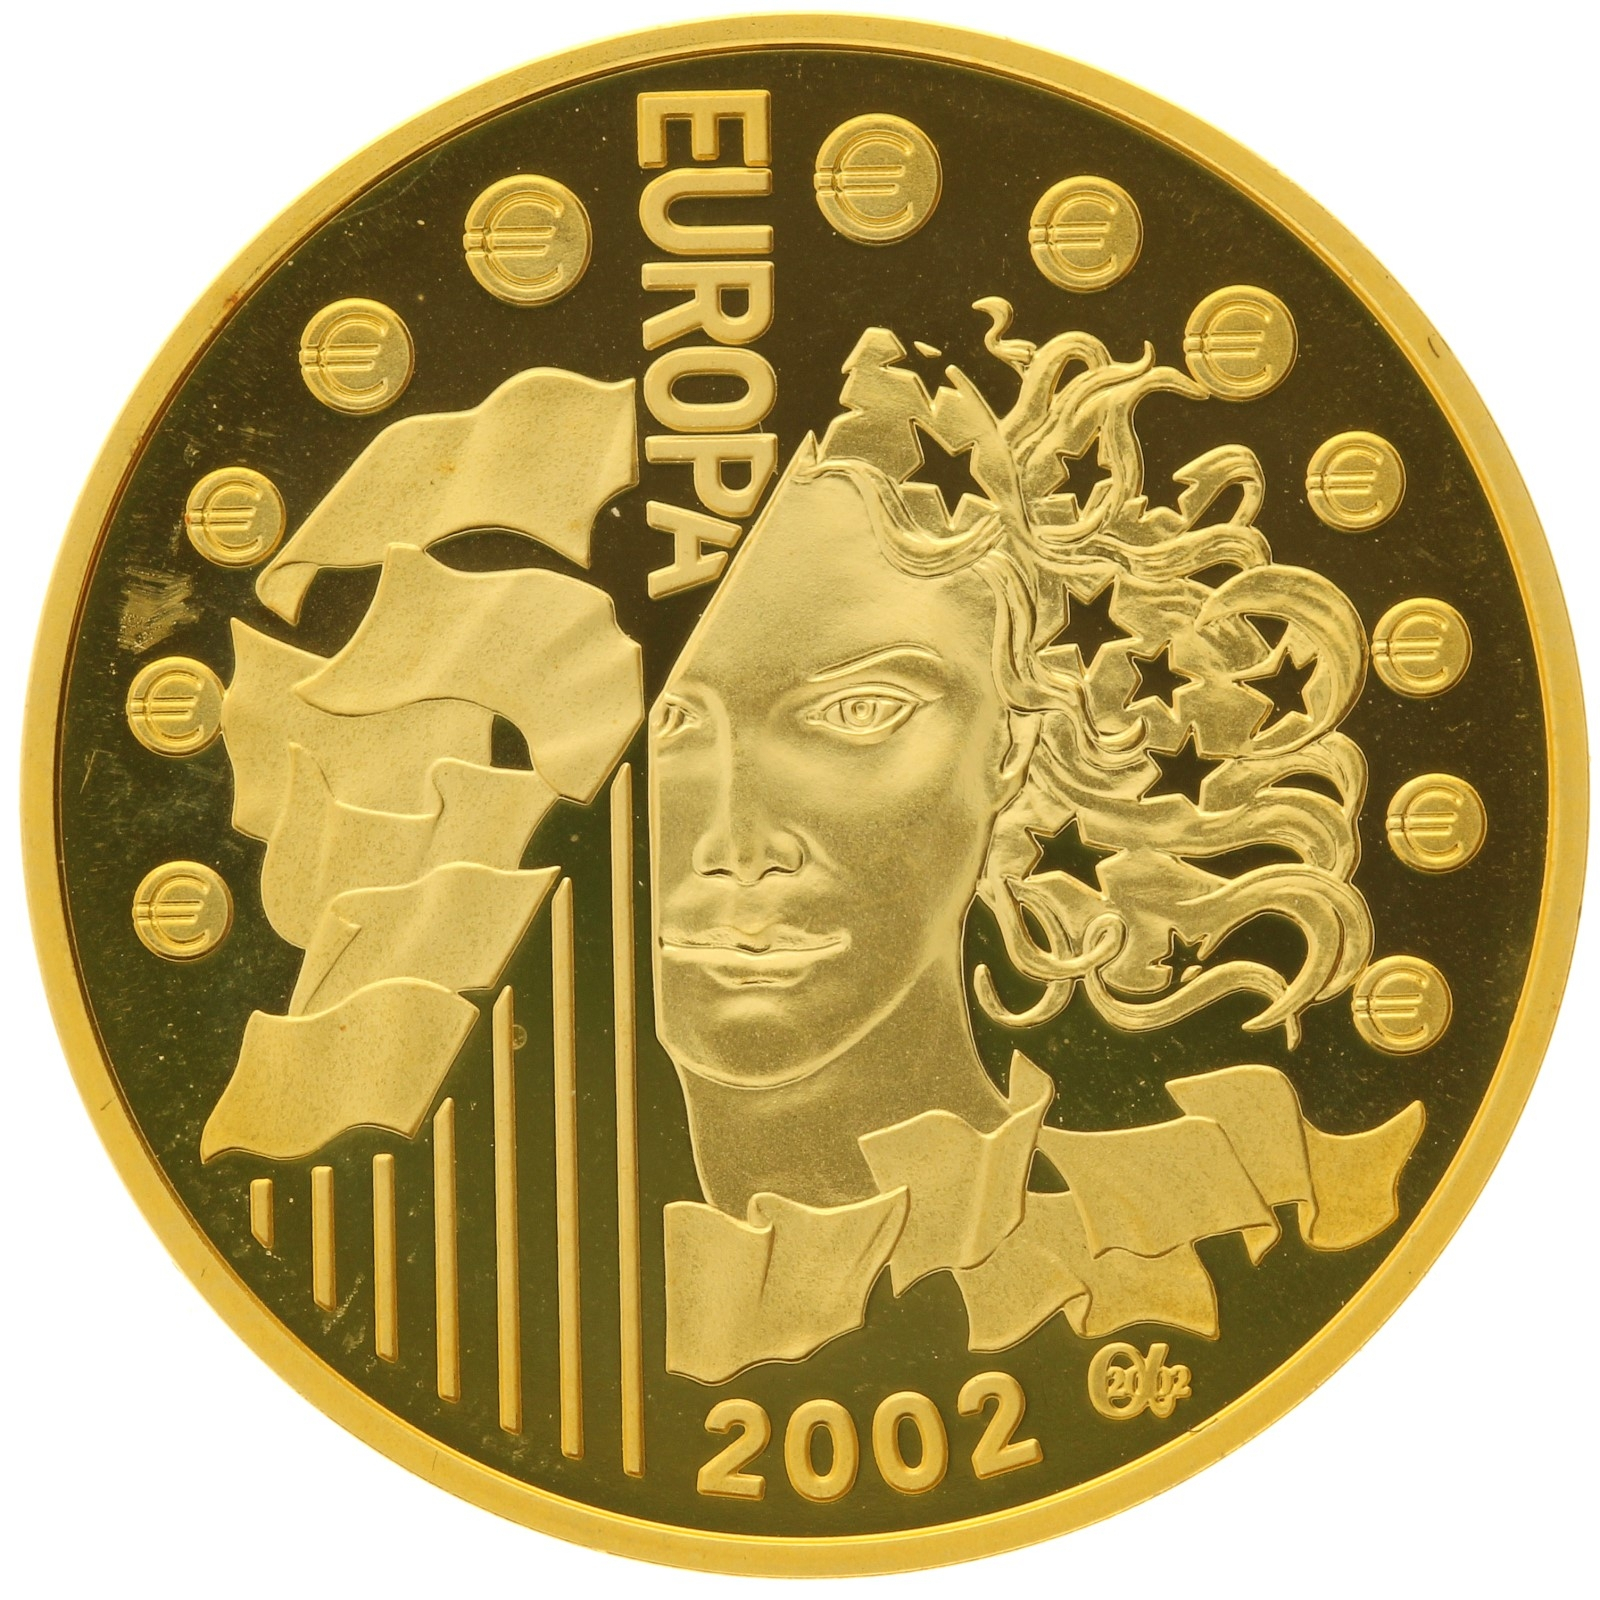 France - 10 euro - 2002 - French Euro Coins - 1/4oz